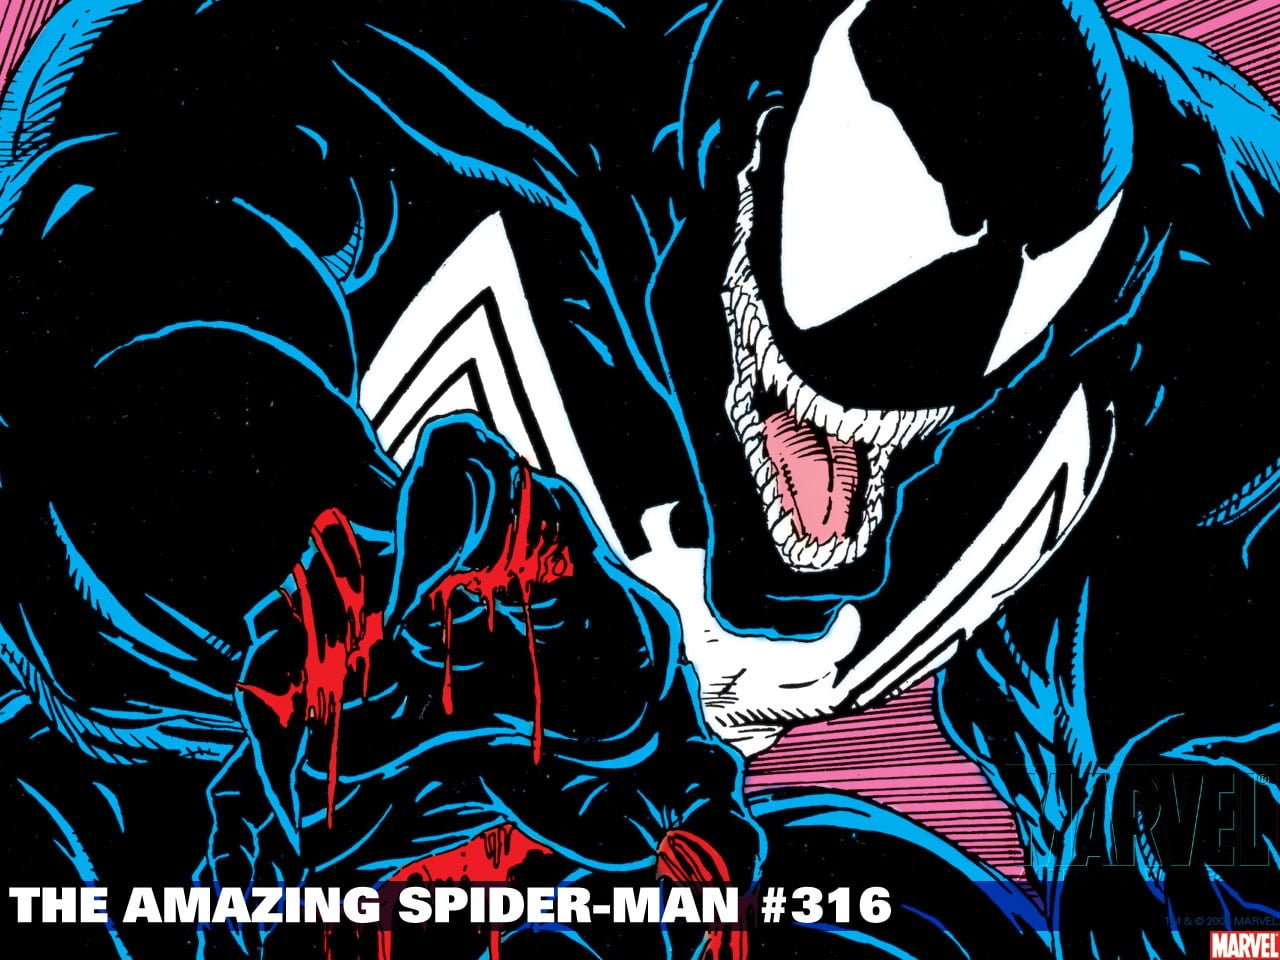 The Amazing Spider-Man #316 Venom digital wallpaper, Marvel Comics, Venom, Spider-Man, comic books